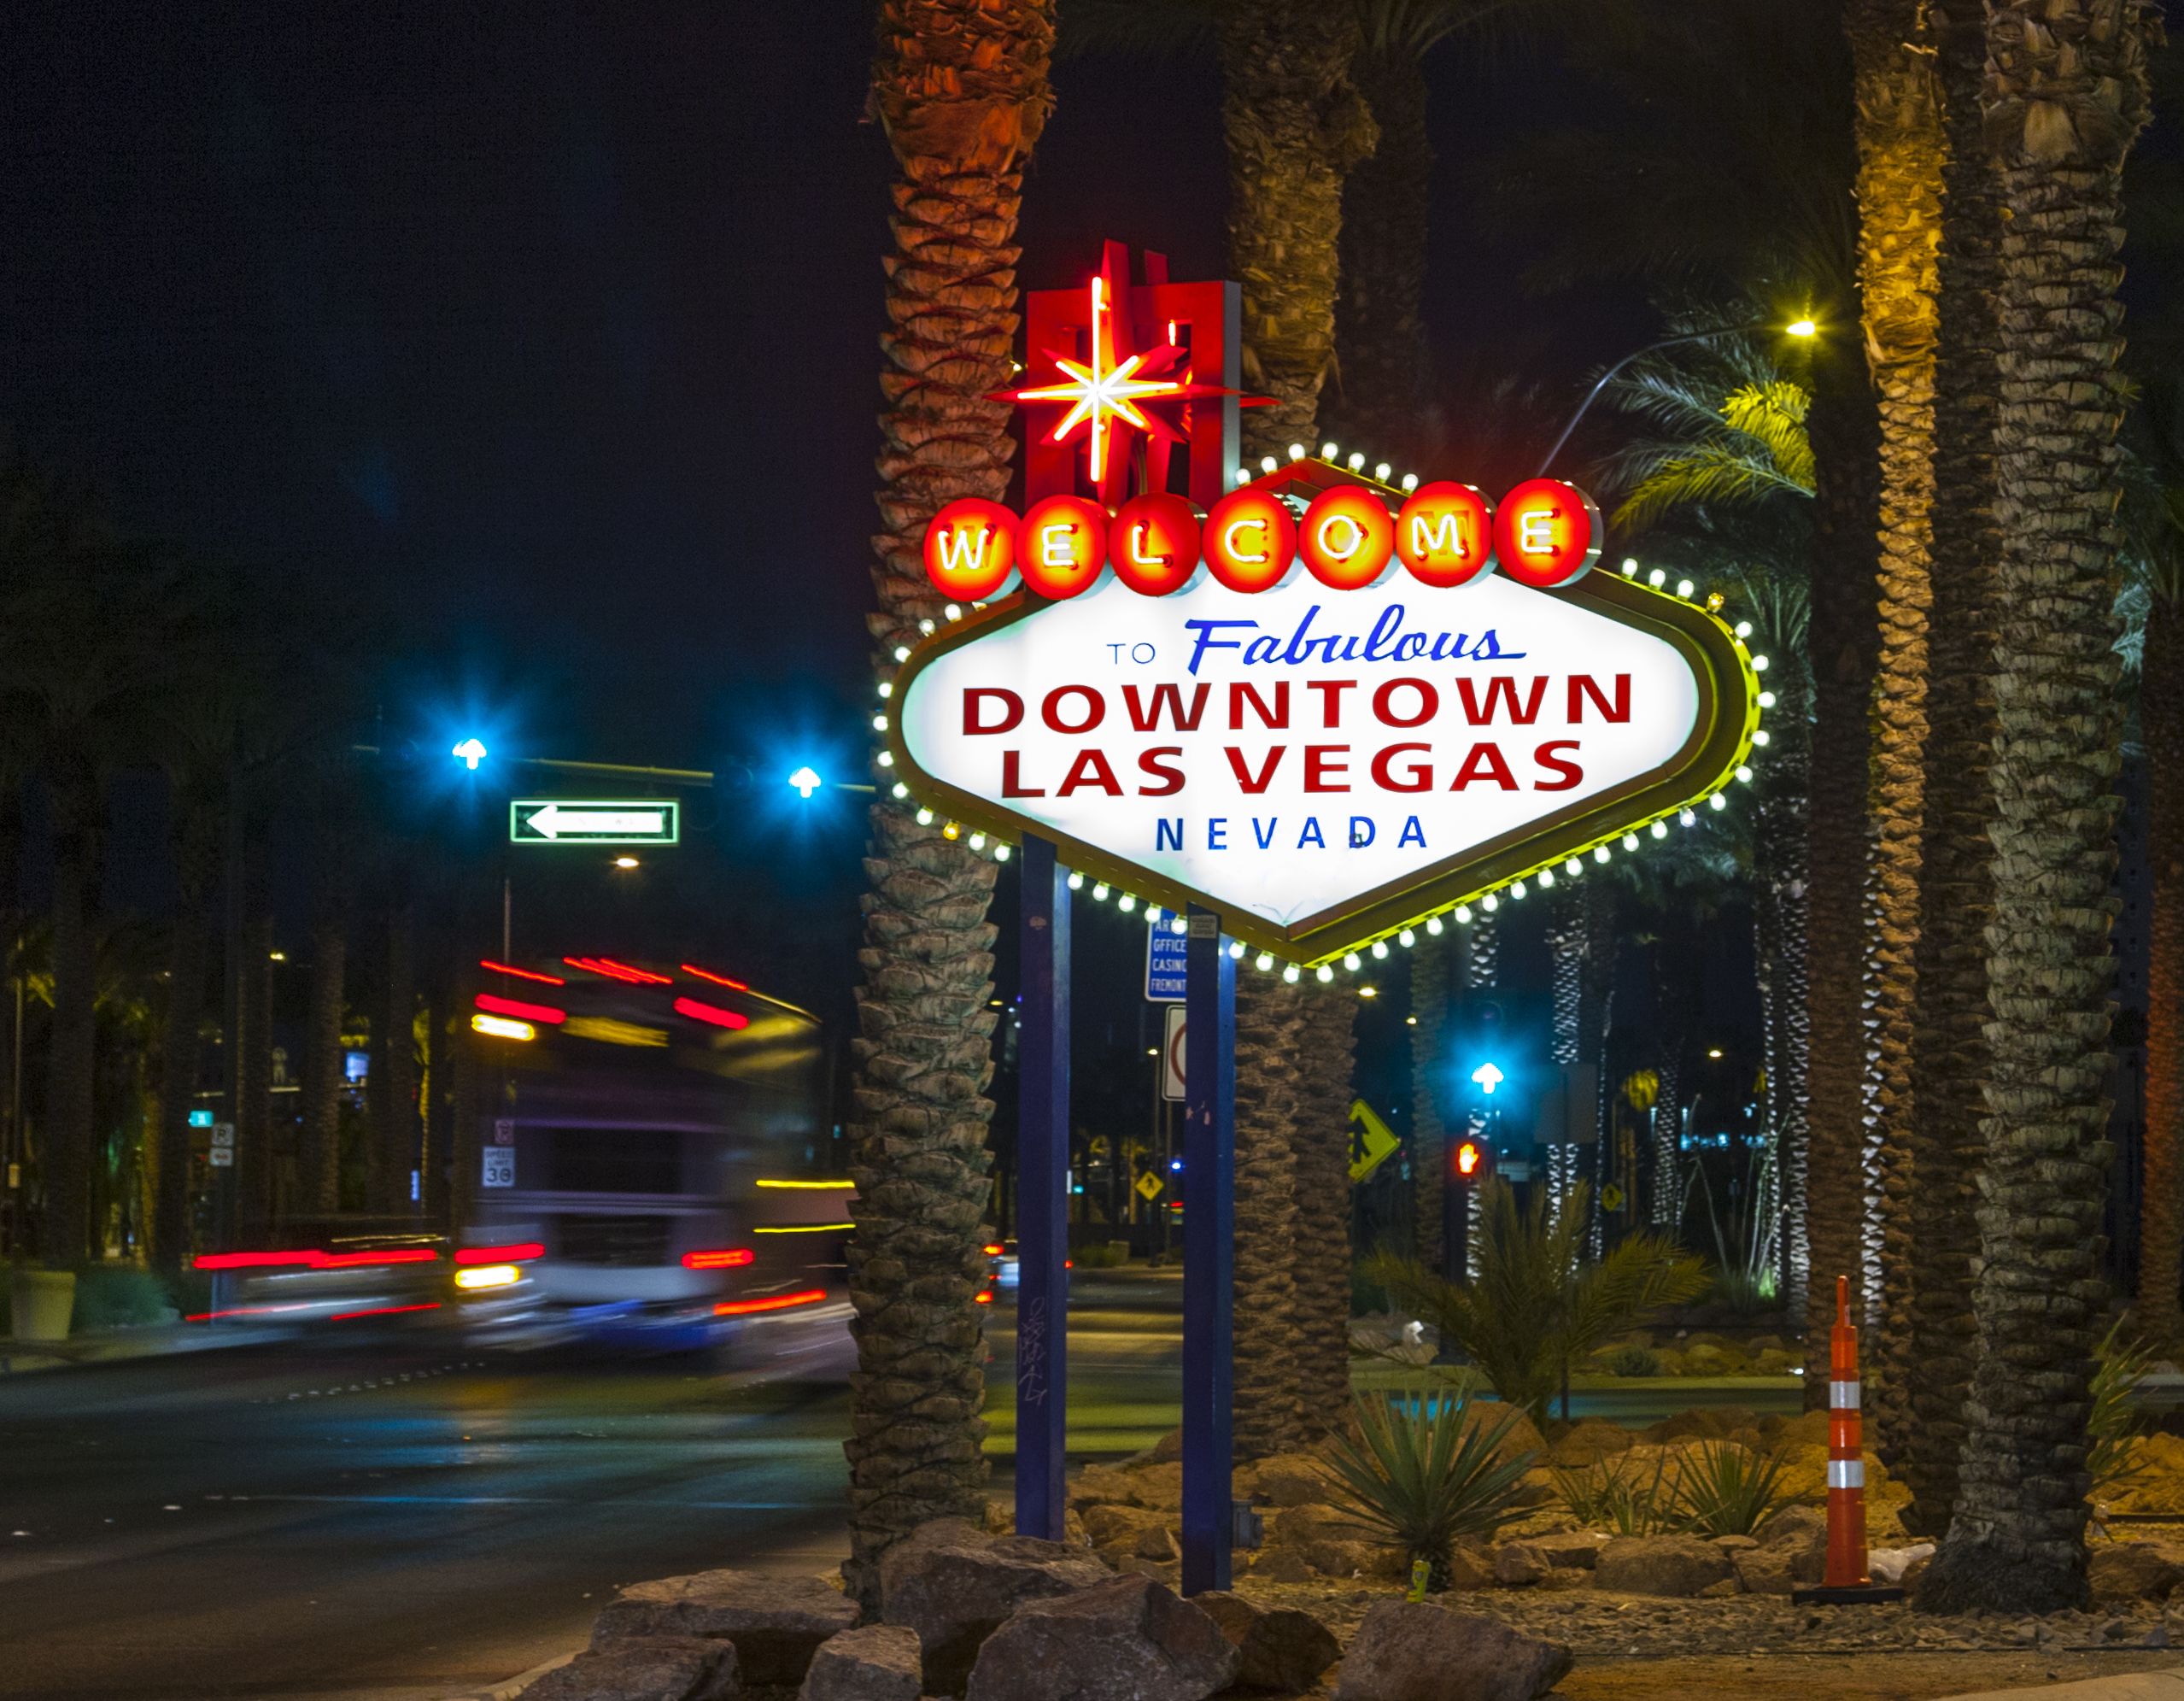 Downtown Las Vegas - Senior Trip to Las Vegas